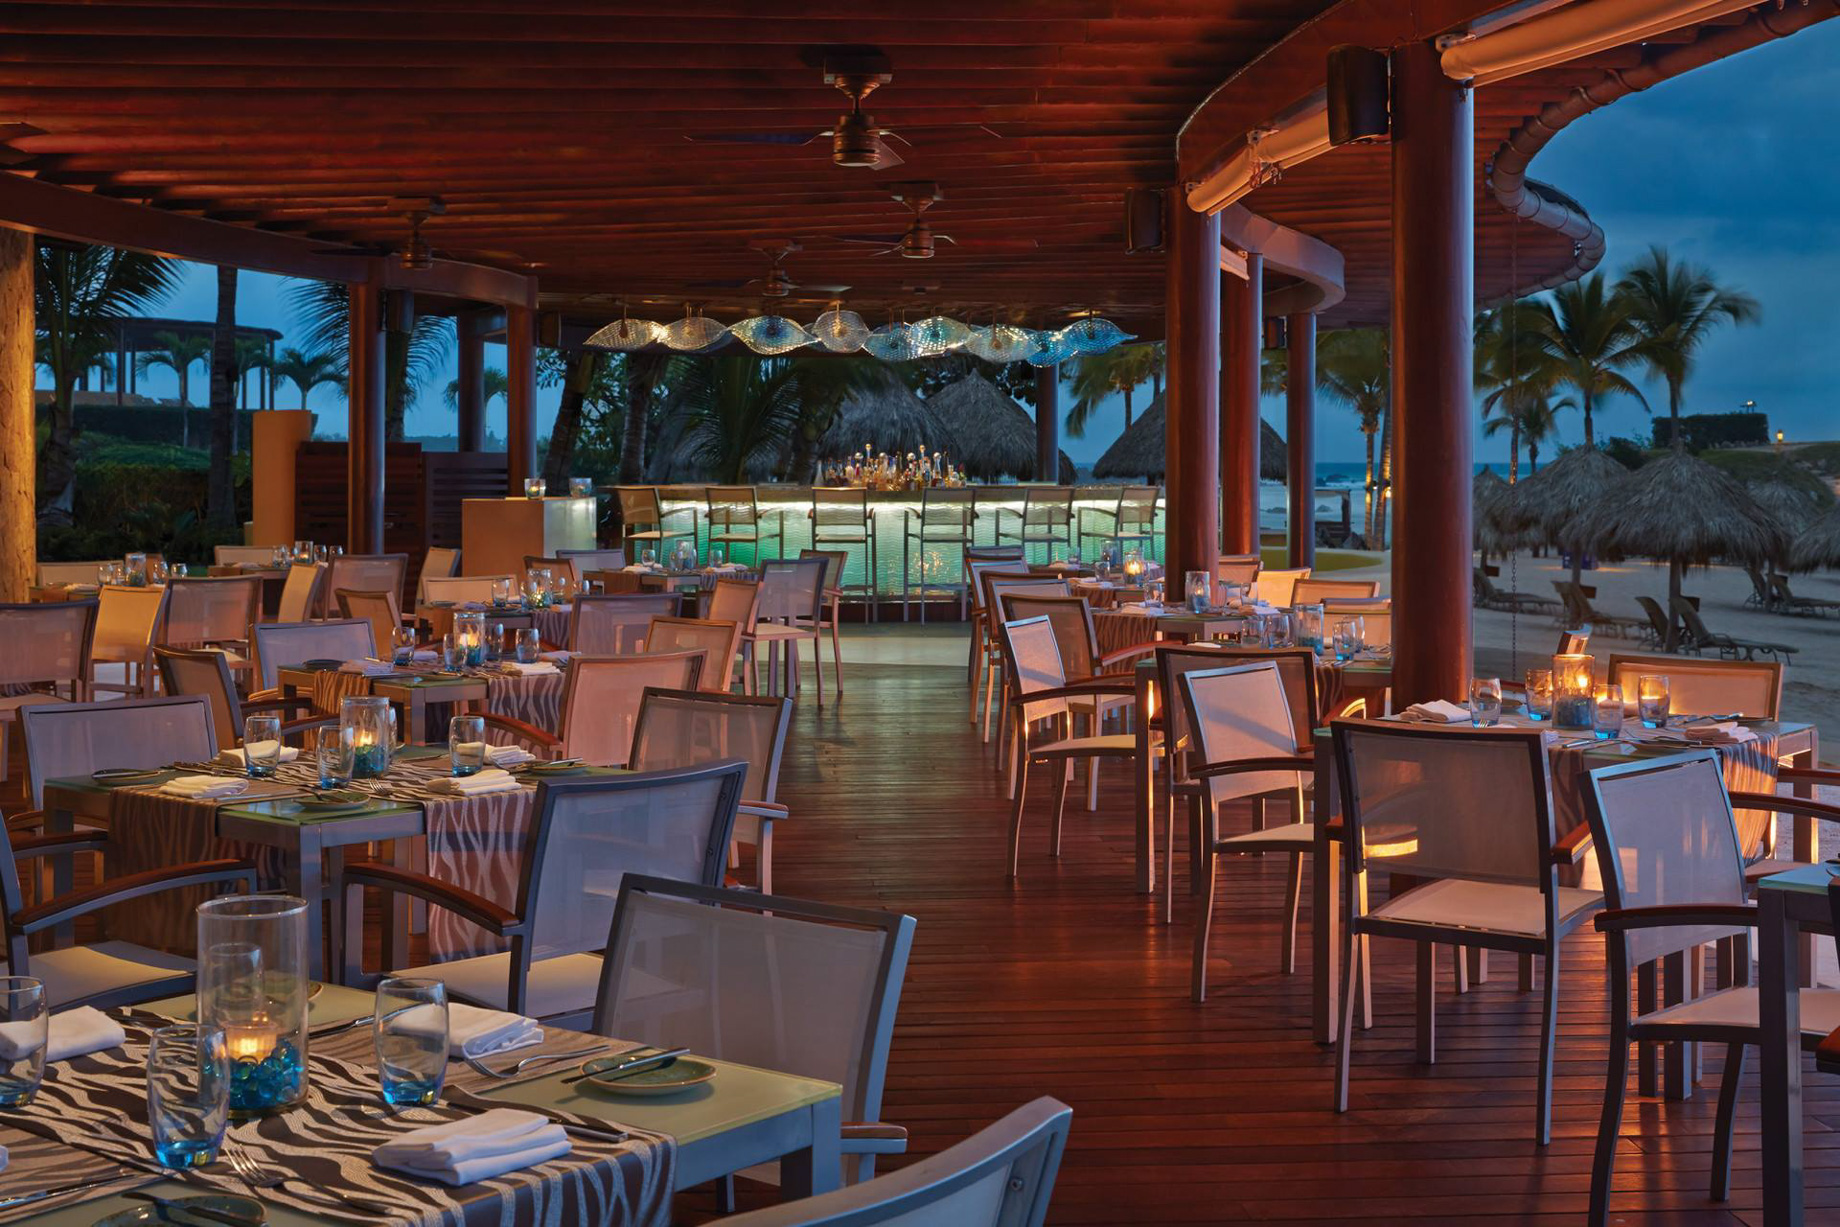 Four Seasons Resort Punta Mita - Nayarit, Mexico - Beachfront Restaurant Sunset Dining